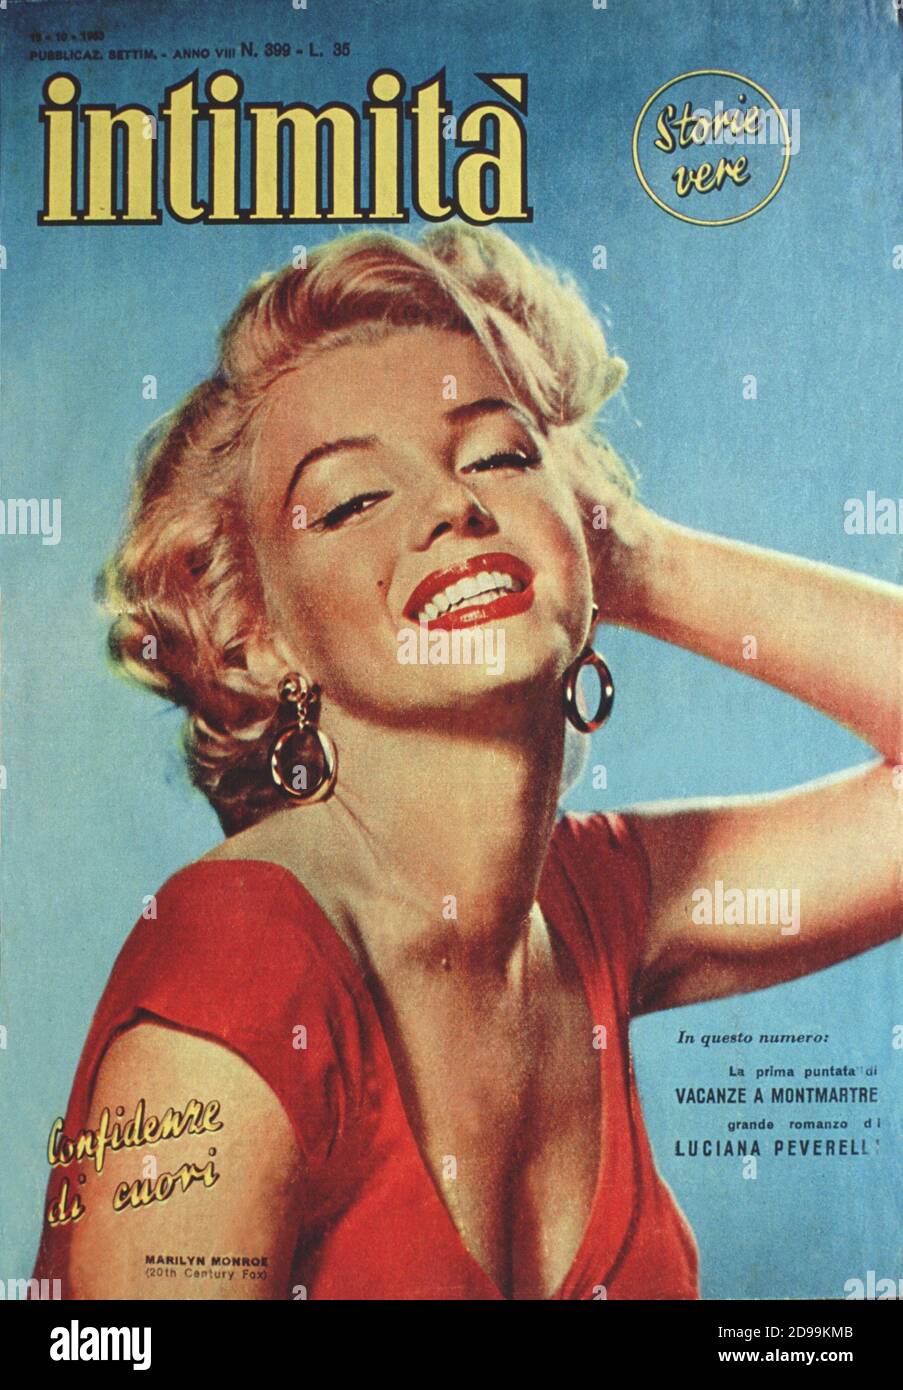 MARILYN  MONROE  magazine cover  ( INTIMITA' 15 october 1953 - ITALY ) - pin up - PIN-UP - orecchini - earring - earrings - scollatura - seno - neckline - neck-opening - décolleté - bionda - blonde -----   Archivio GBB Stock Photo